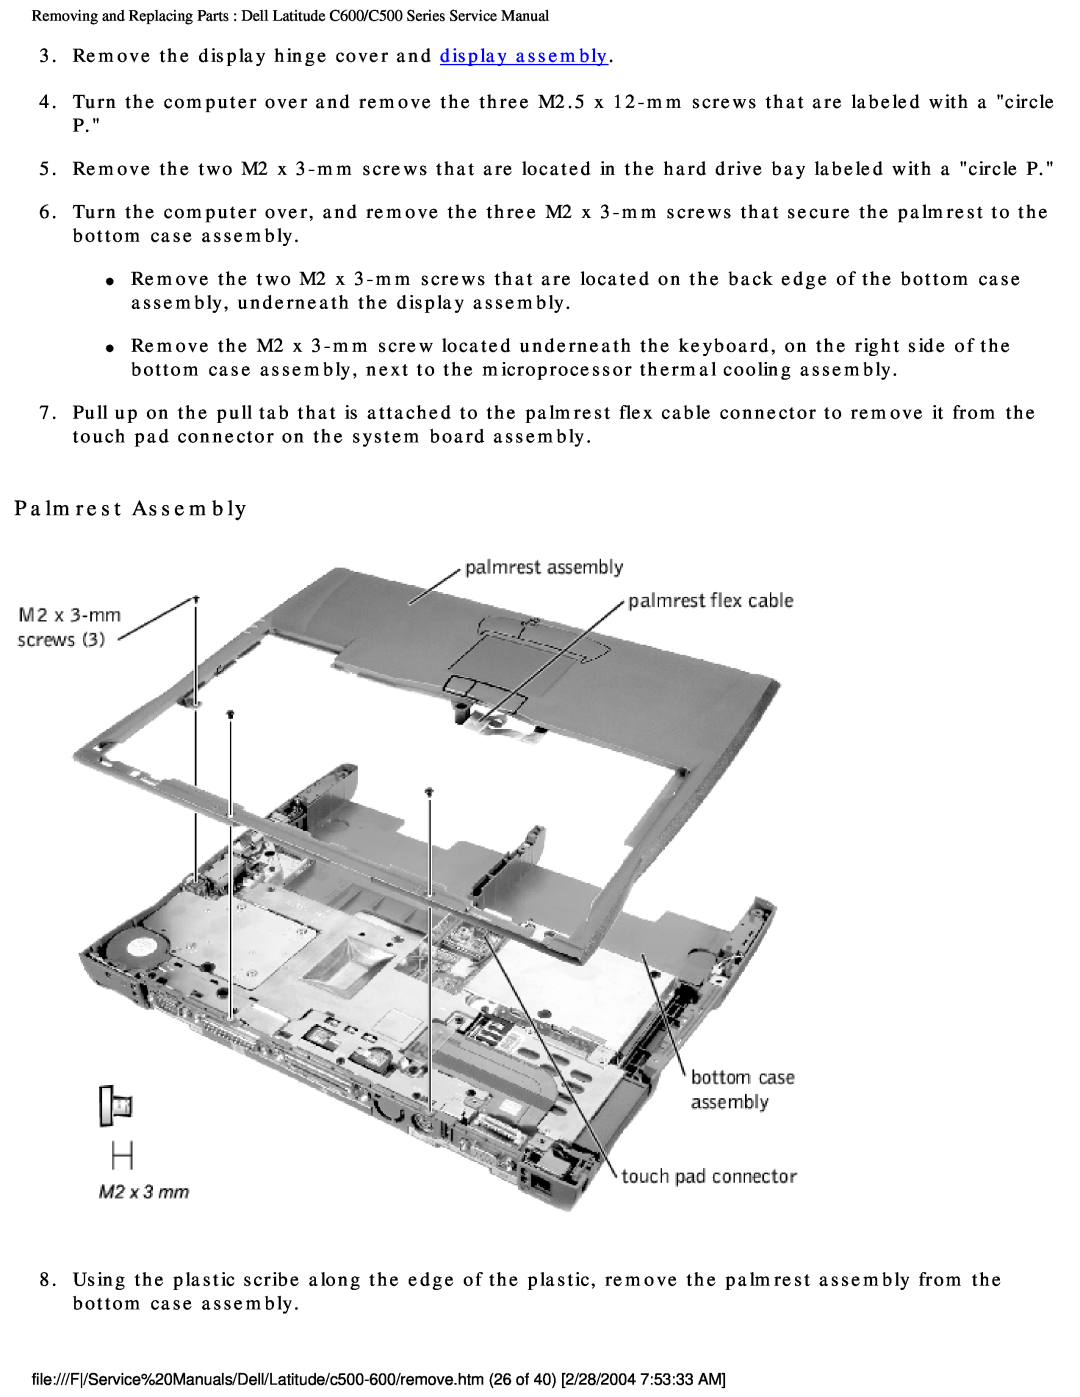 Dell C500 manual Palmrest Assembly 